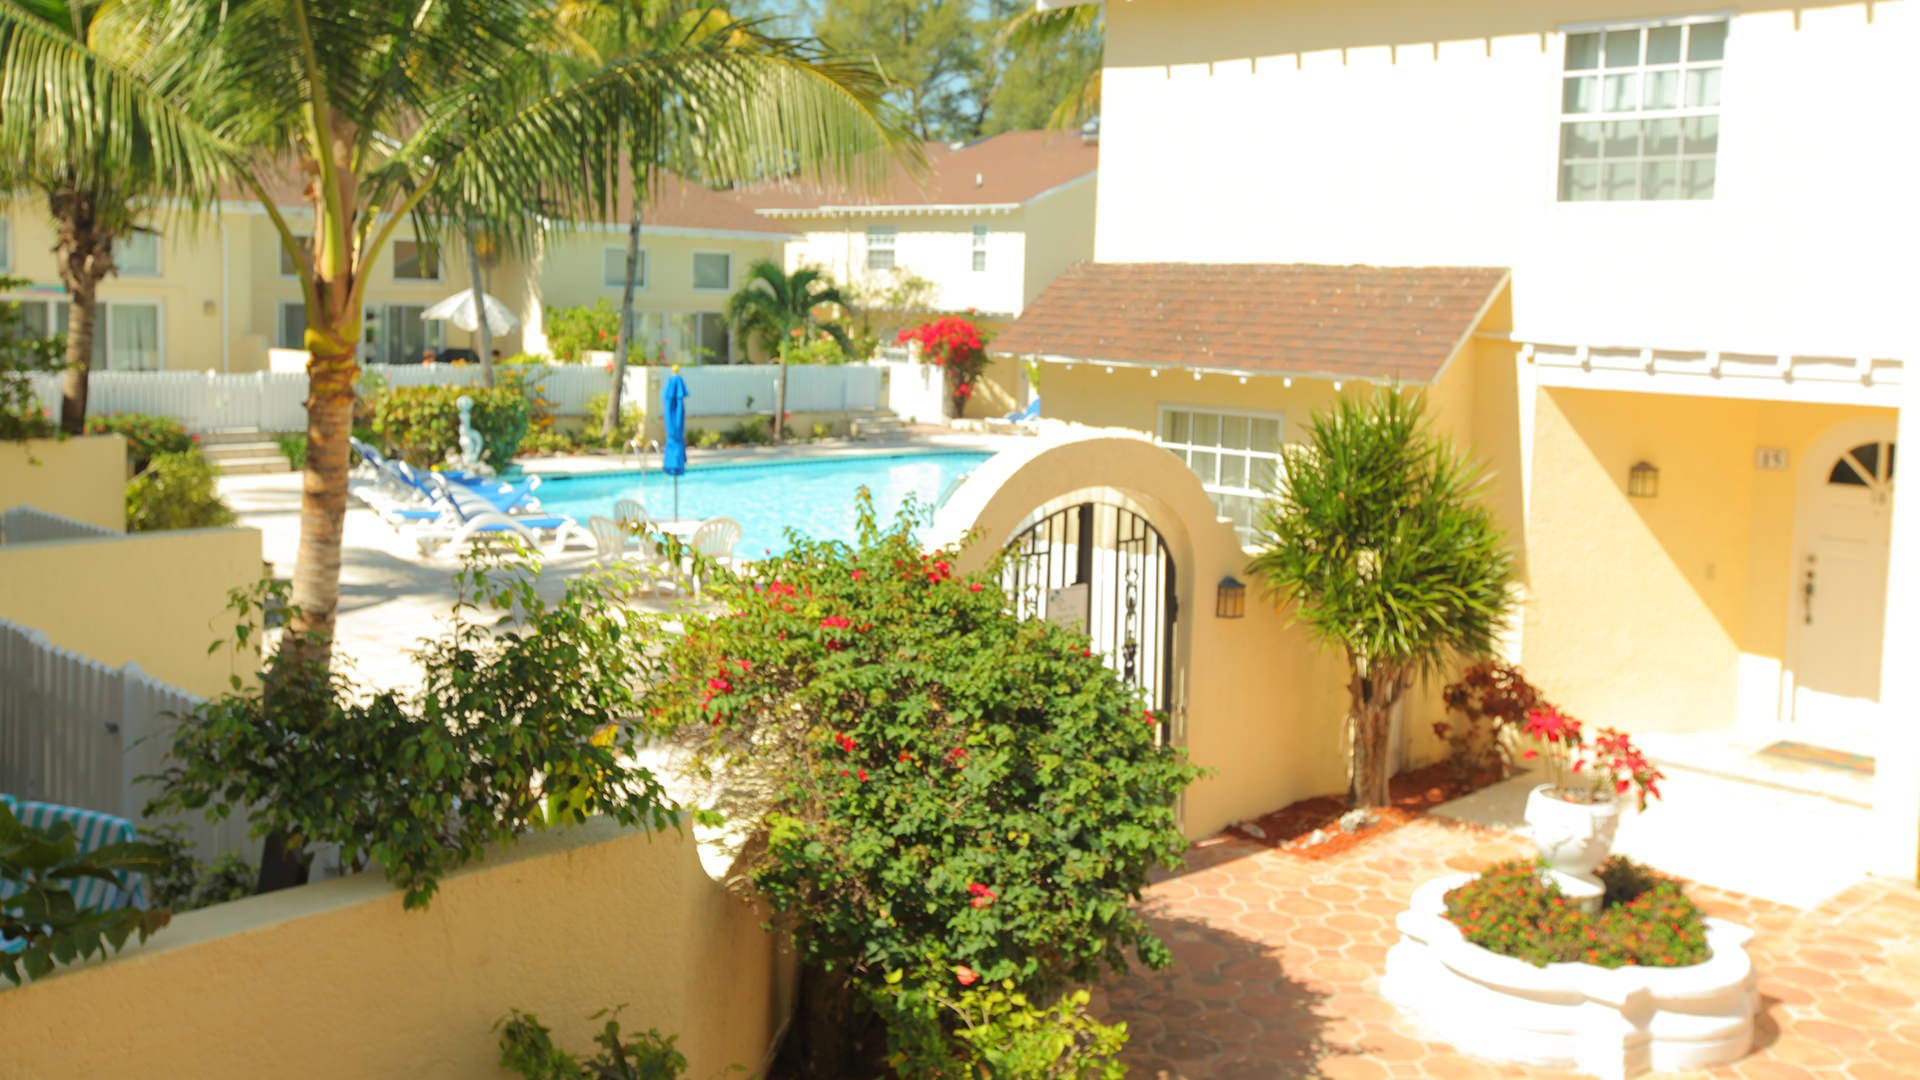 Sunrise Beach Club & Villas in The Bahamas